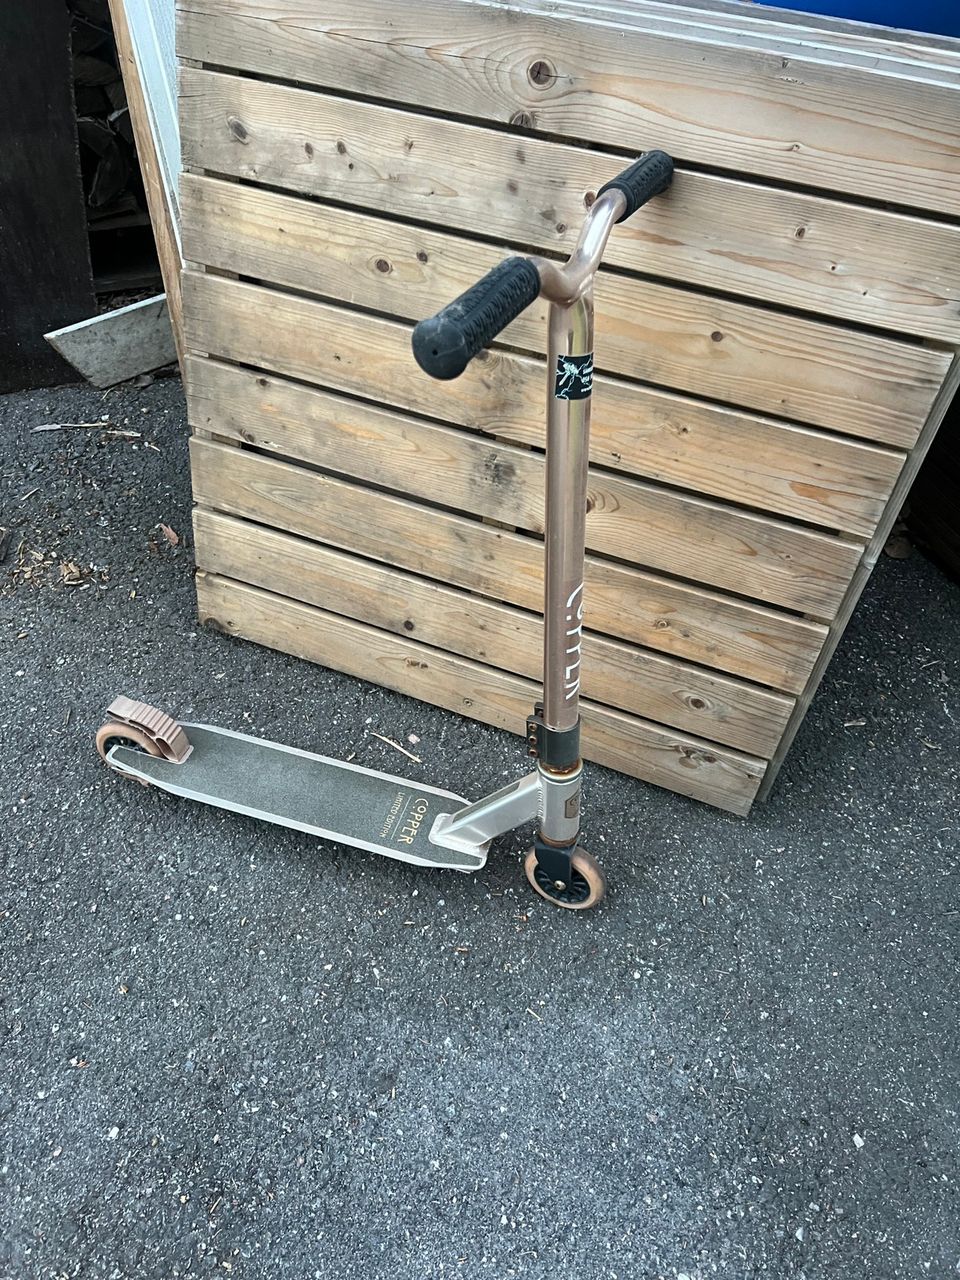 Copper stunt scooter potkulauta